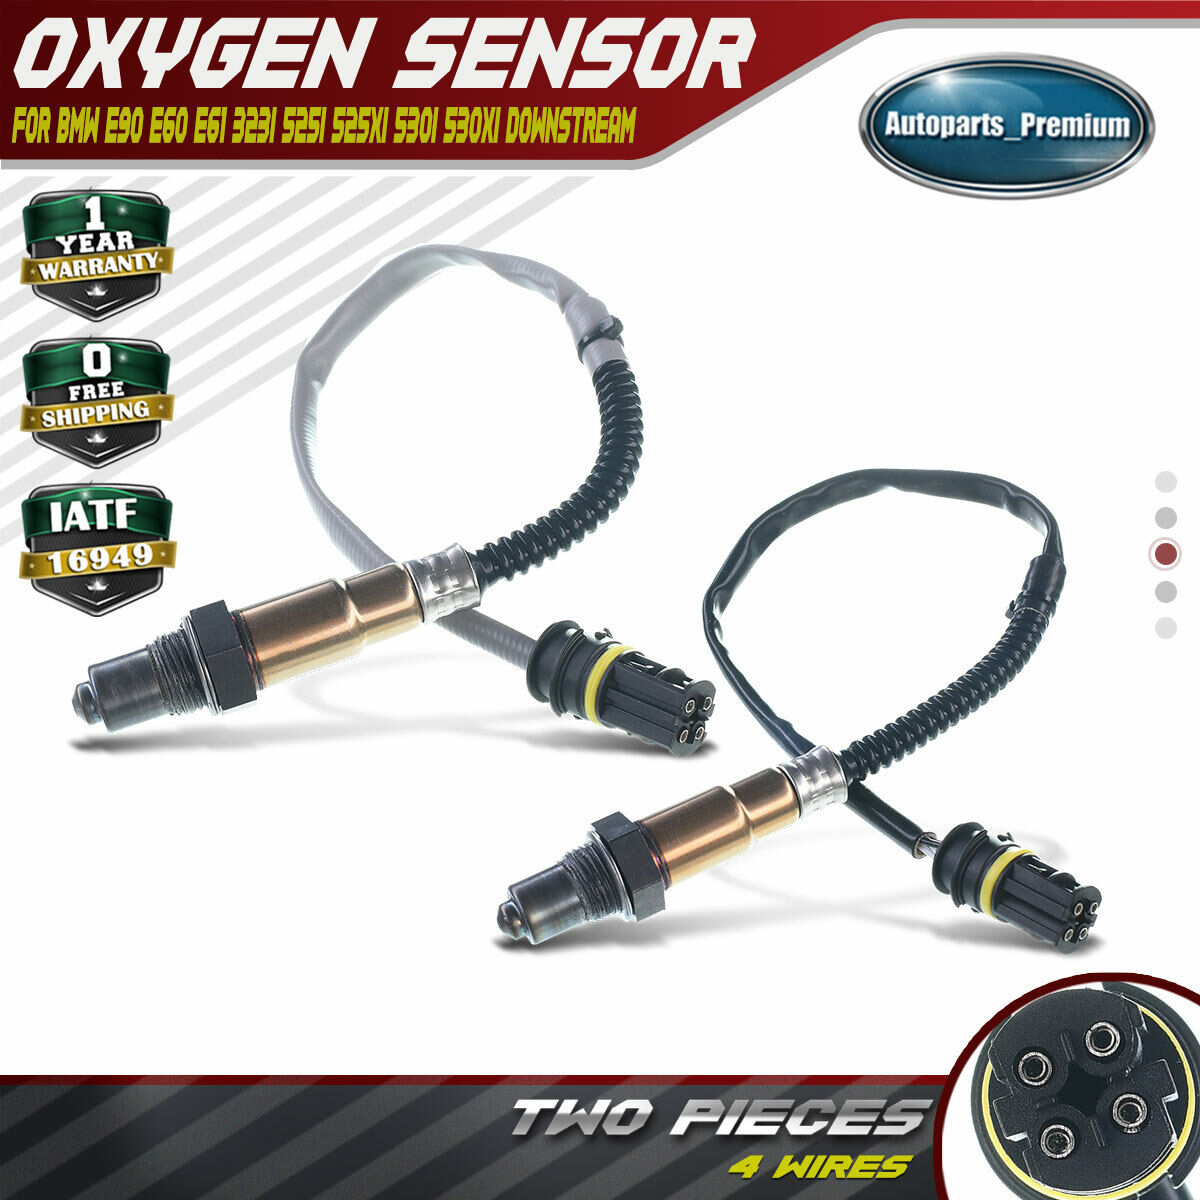 2x Downstream Oxygen Sensors for BMW 525i 525xi 530i 530xi 06-2007 323i 06-2009